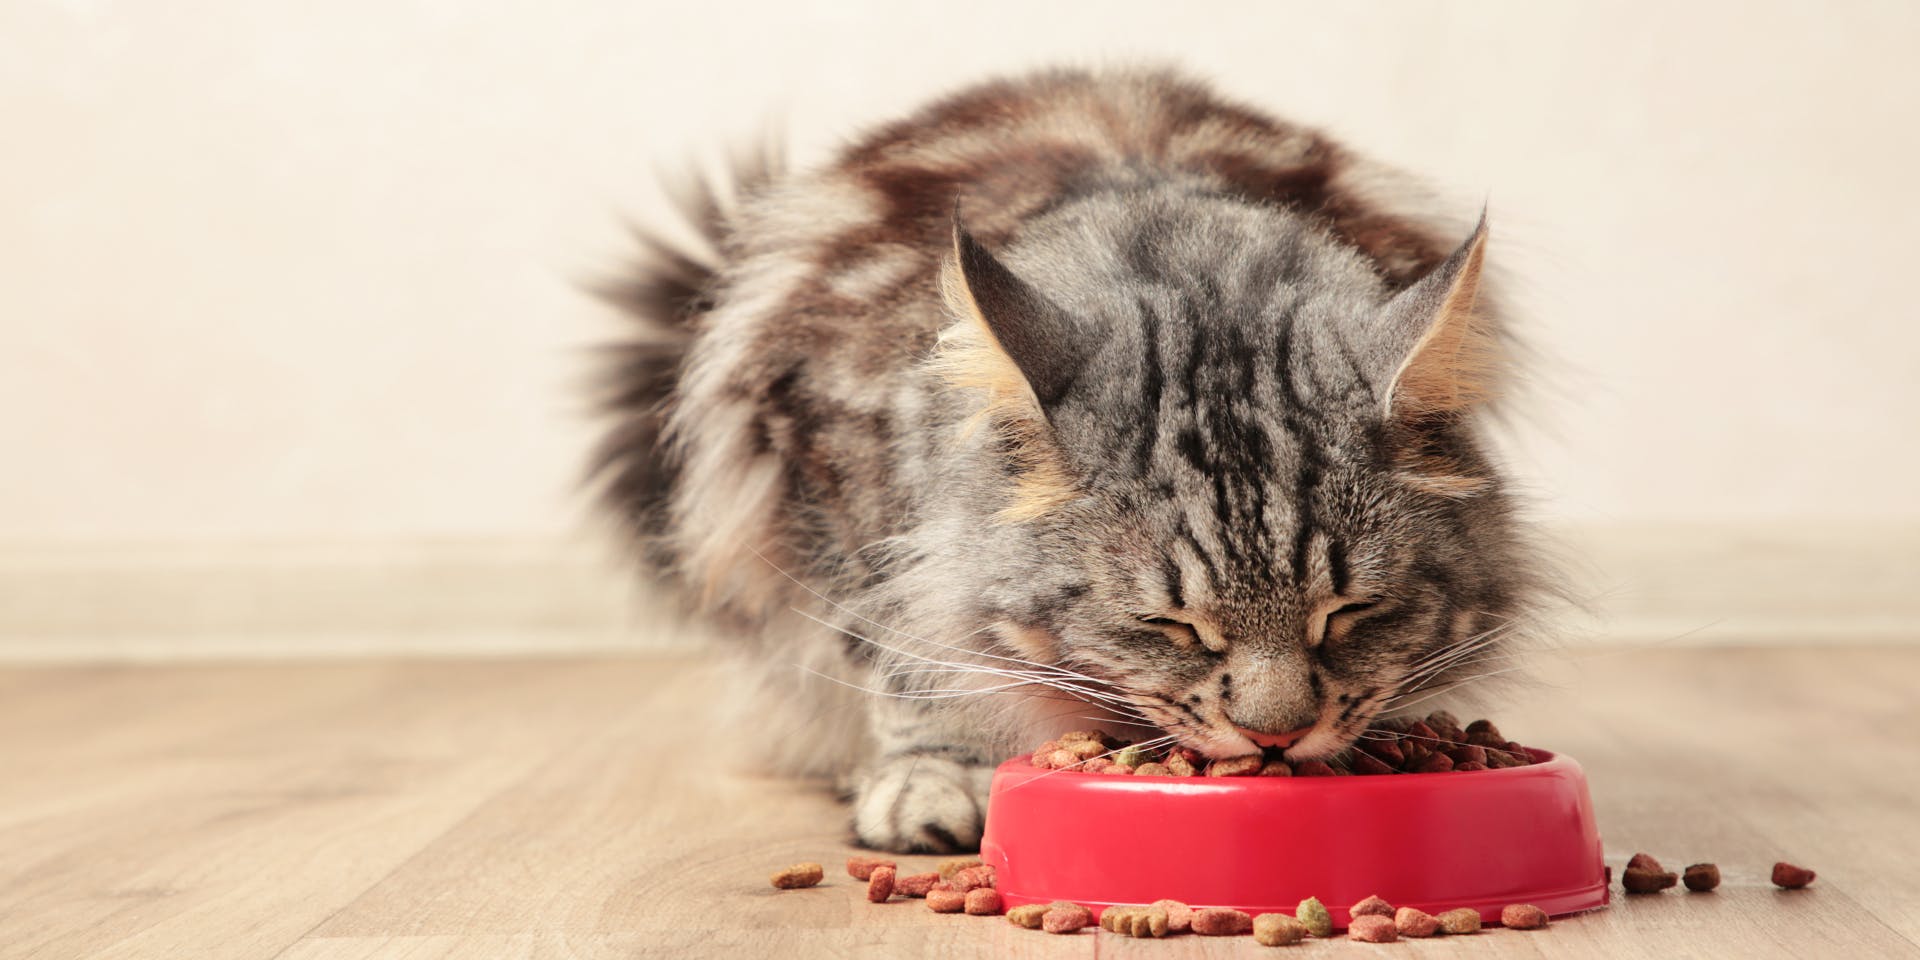 A fluffy tabby cat eating his dinner.